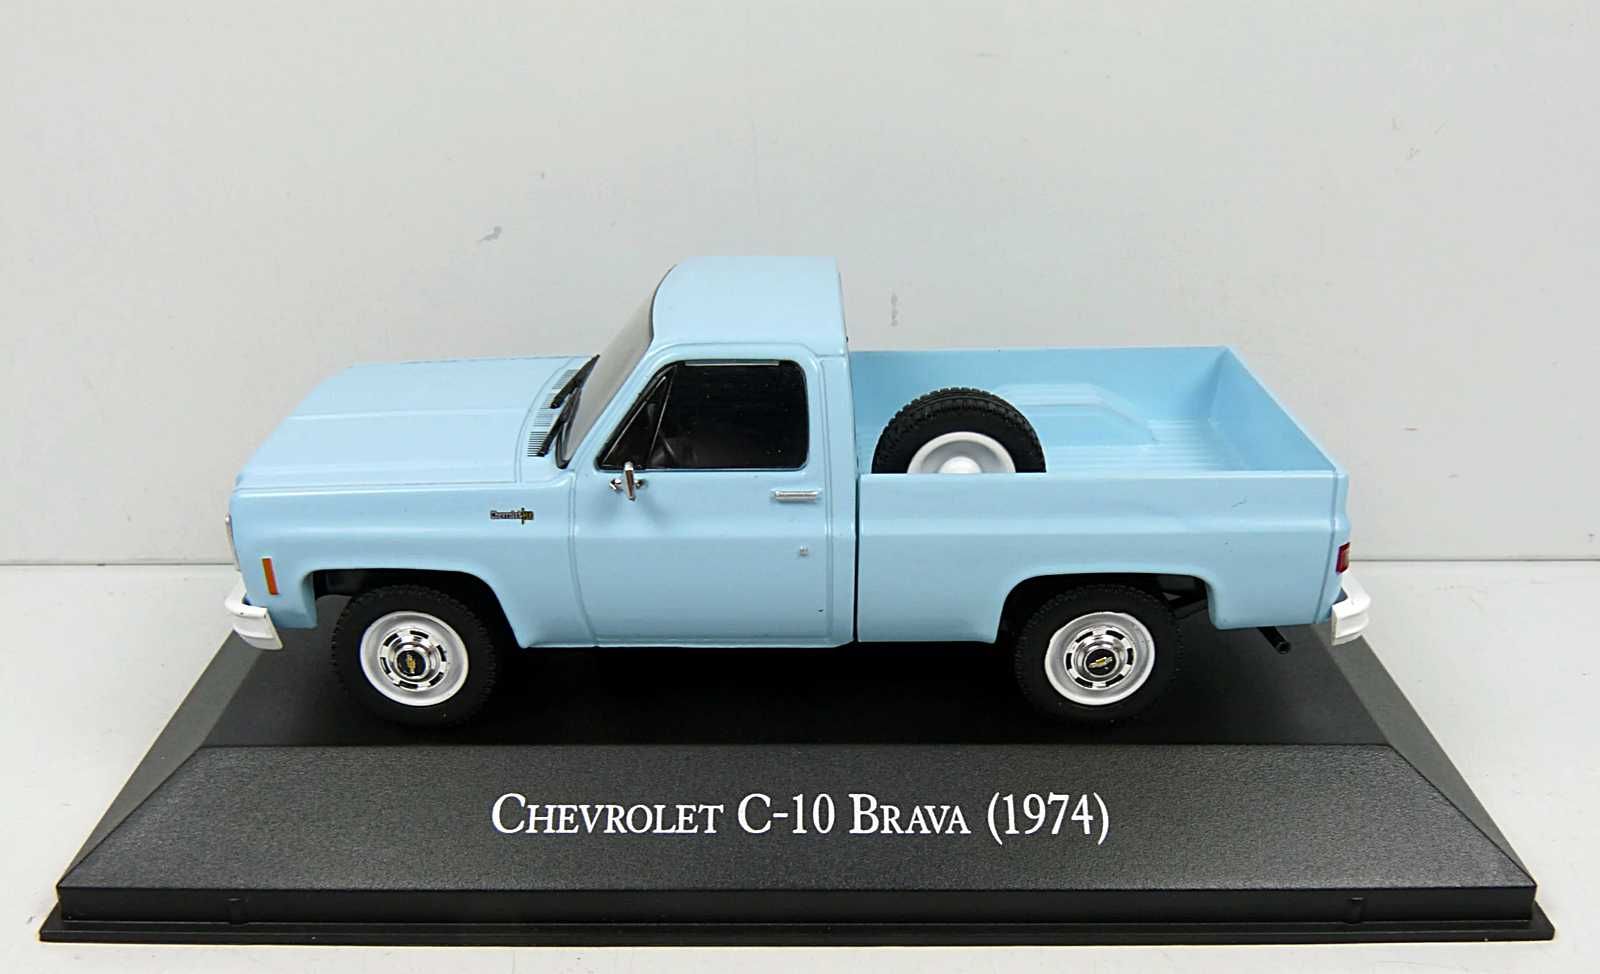 Chevrolet C-10 Brava (1974) SALVAT 1:43